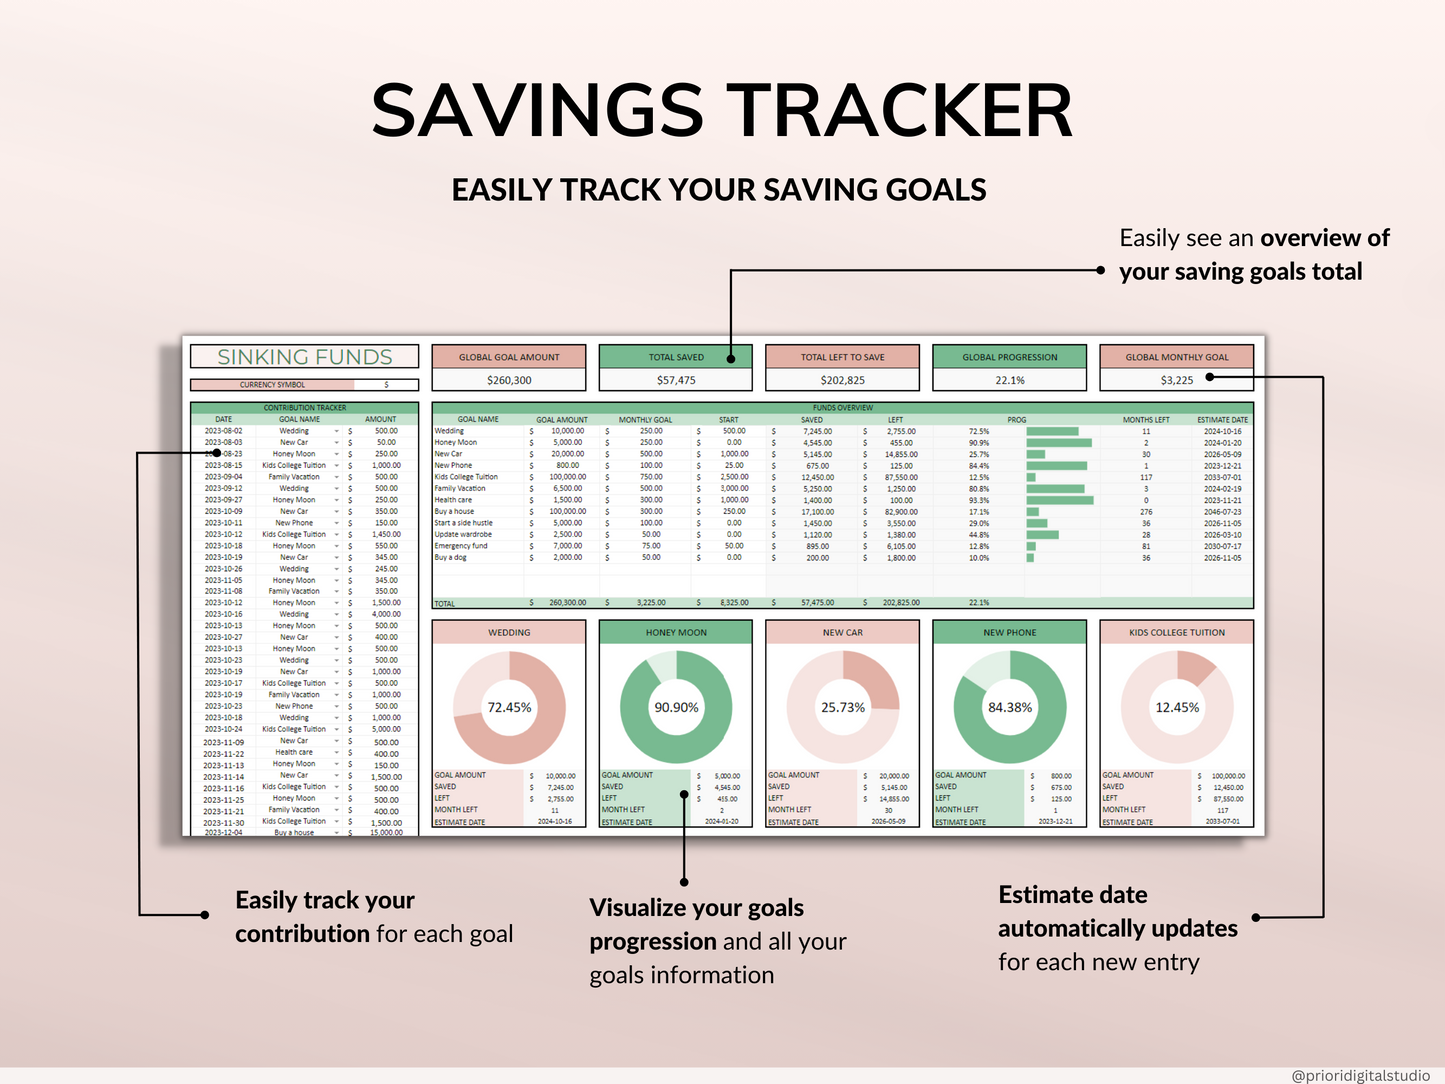 PLR Savings Tracker Spreadsheet Commercial Use PLR Google Sheets Private Label Rights PLR Template Sinking Funds Tracker Savings Spreadsheet